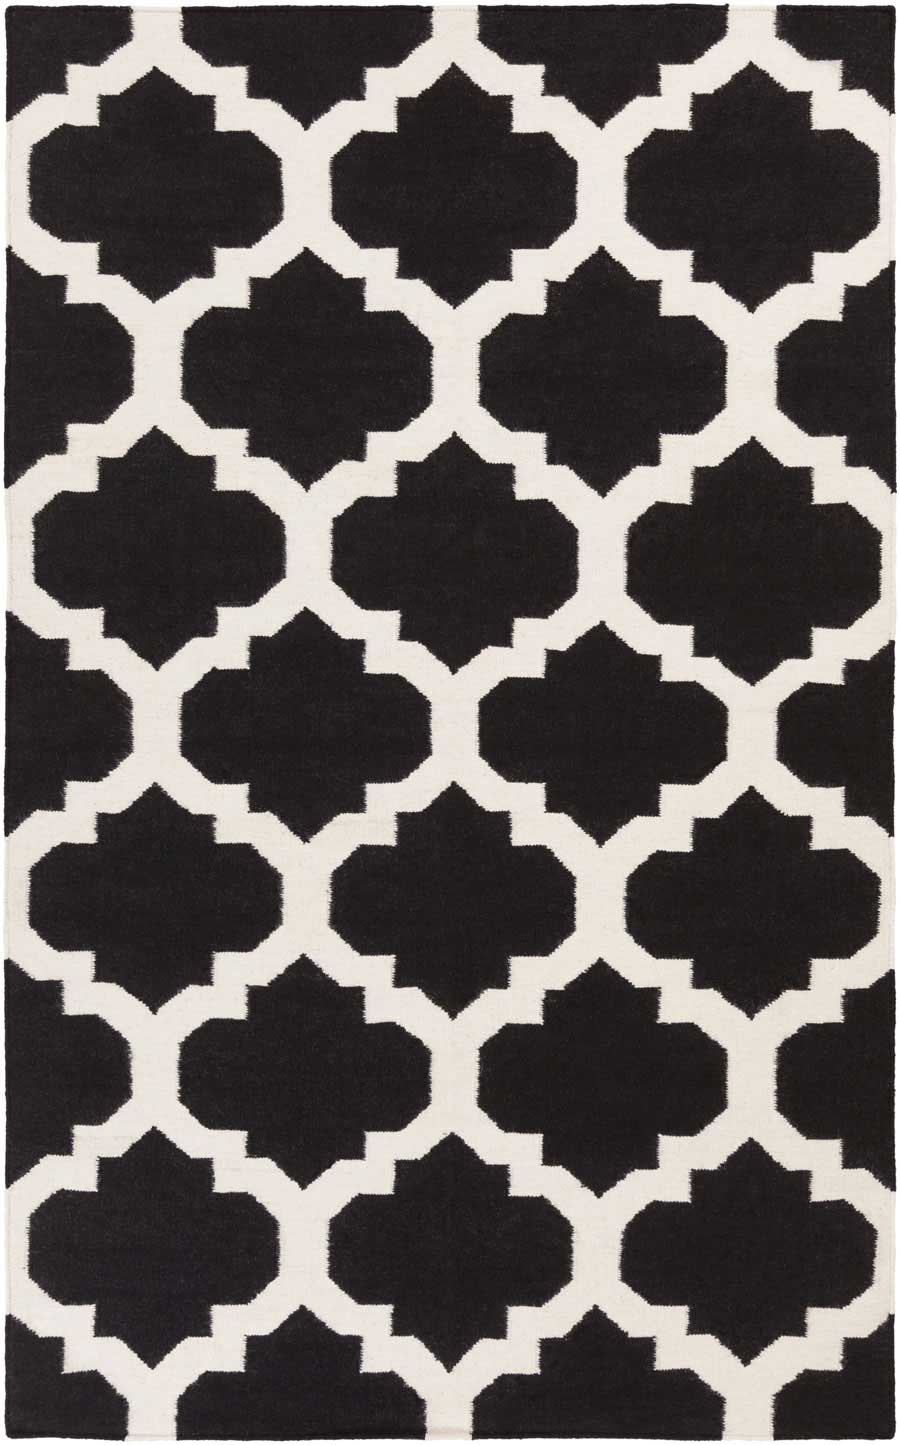 minimalist-living-room-style-black-white-quatrefoil-stencil-clipart-area-rug-5-x-7-feet-rectangular-shape-edge-hand-tufted-full-cotton-materials-9-mm-pile-height-size-item